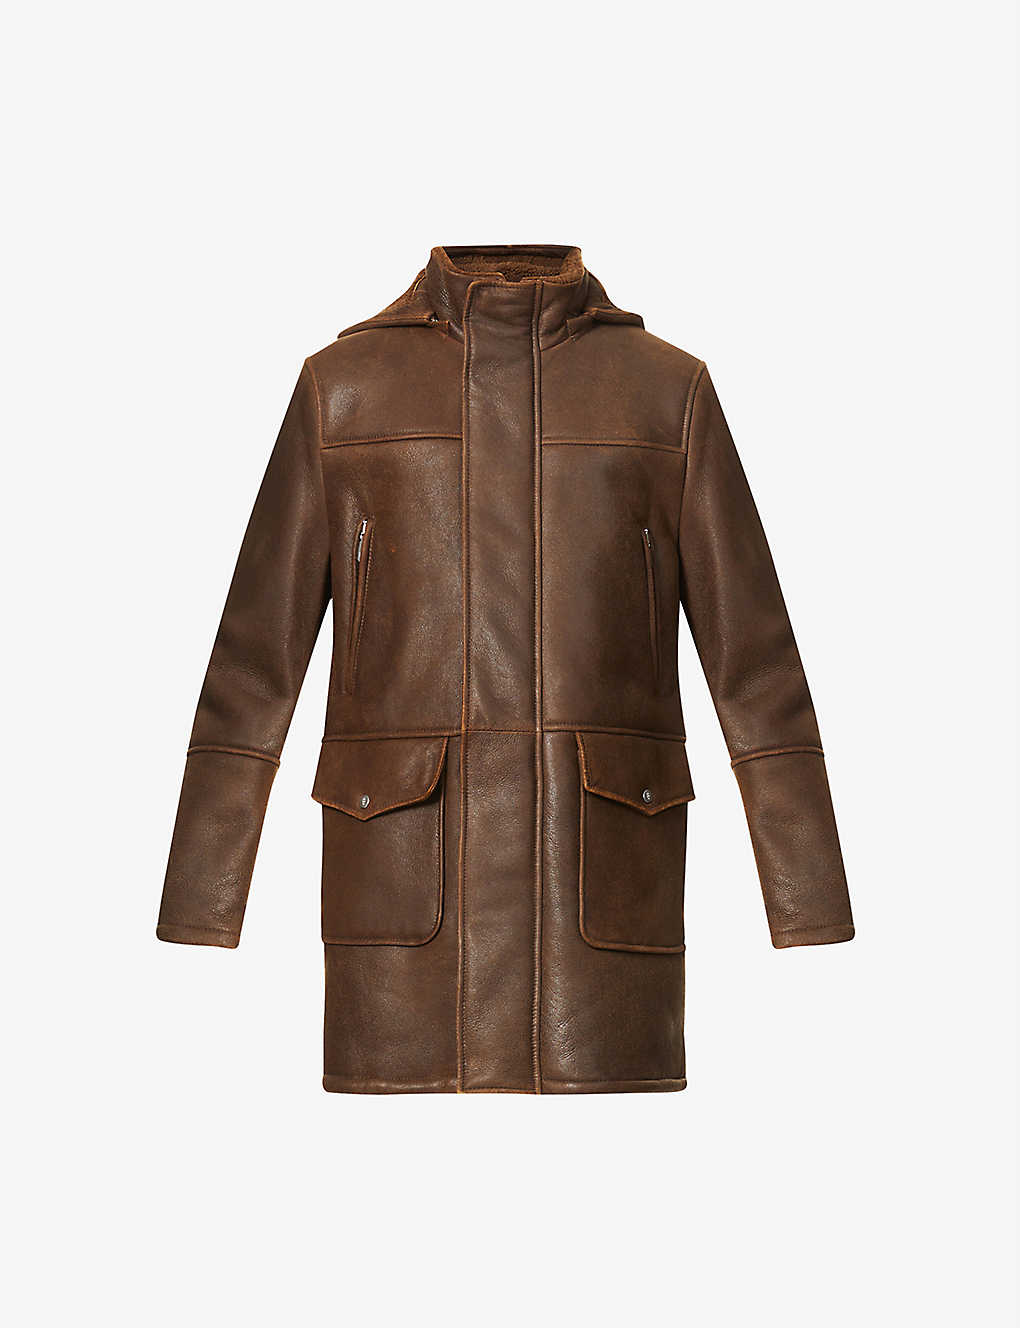 Men's Fur Sheepskin Leather Coat In Dark Brown With Removable Hood